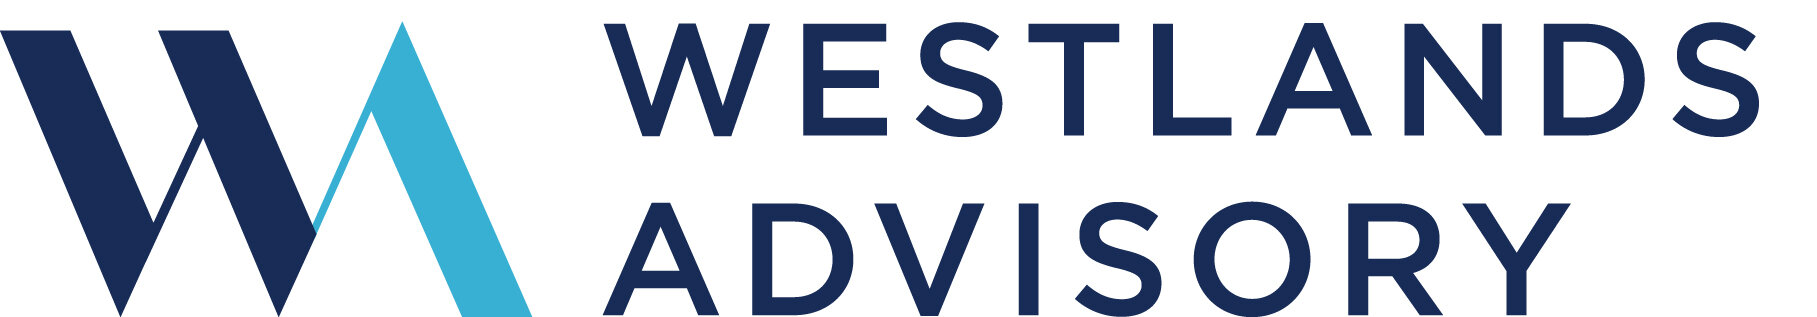 Westlands Advisory_CMYK logo.jpg